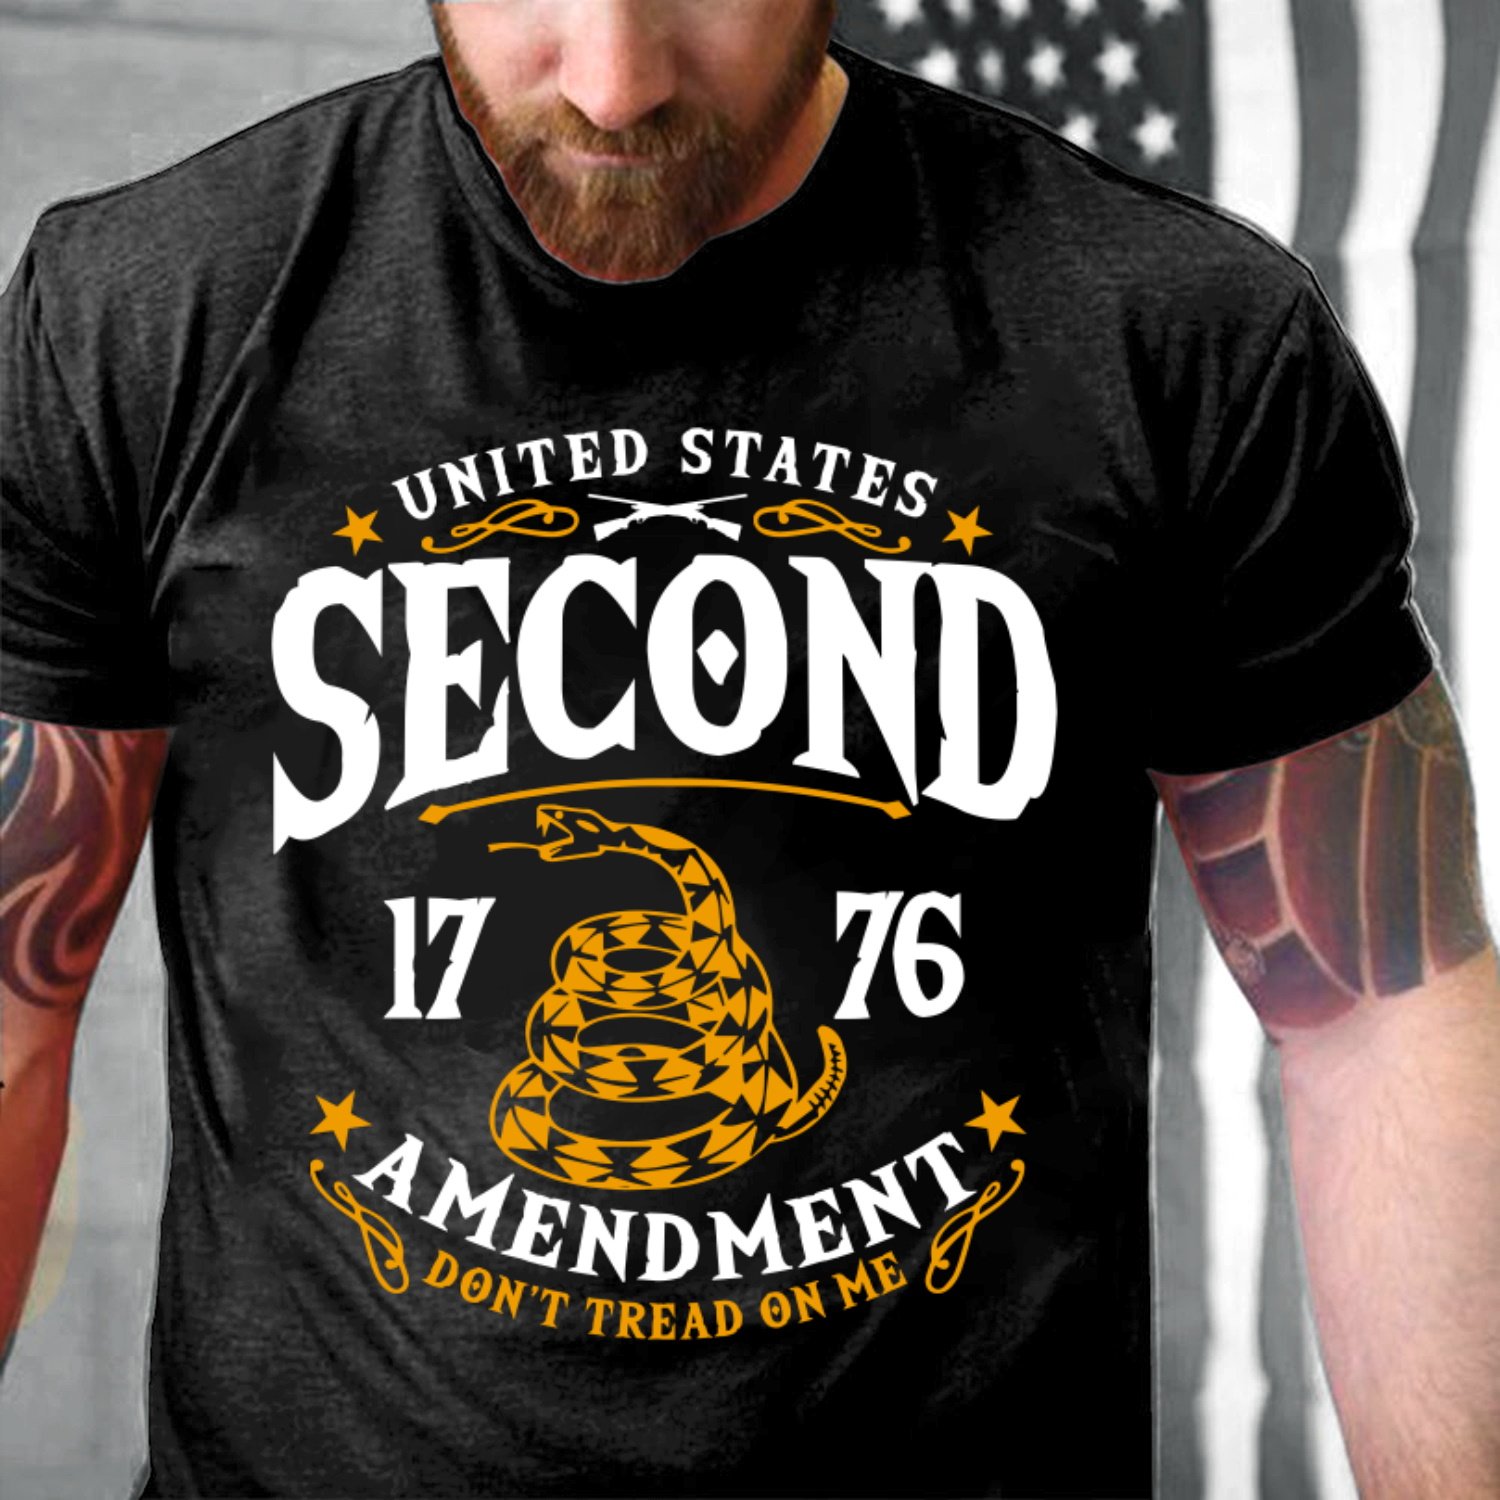 2nd Amendment Shirt, United States Second 1776 Amendment, Don't Treat On Me T-Shirt